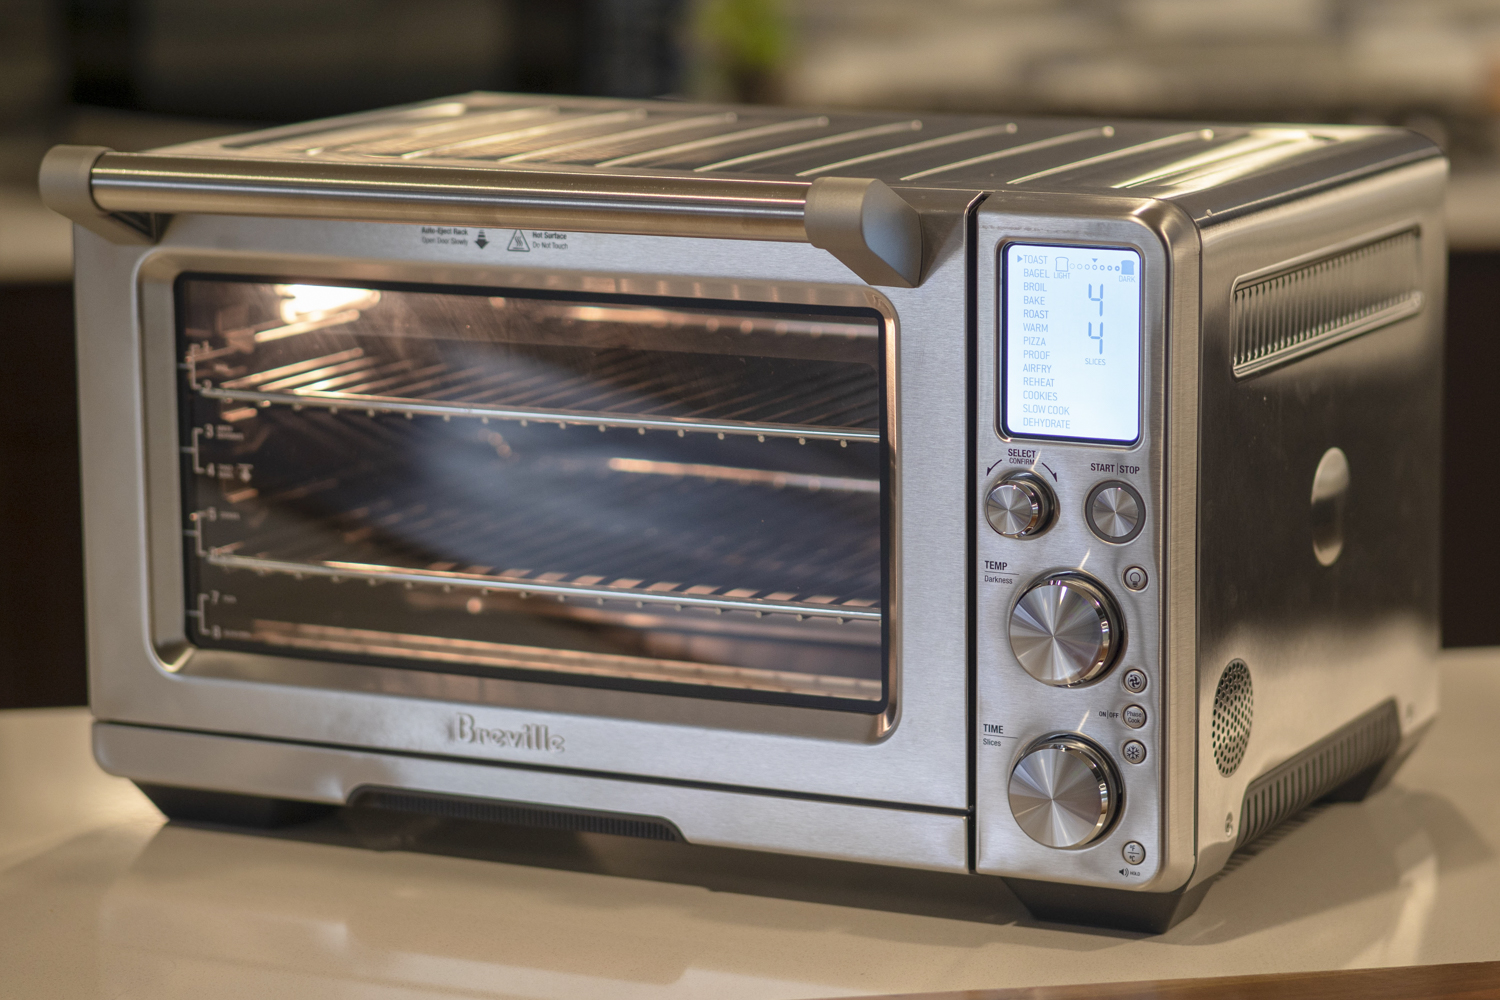 https://www.digitaltrends.com/wp-content/uploads/2018/05/breville-bov900bss-toaster-oven-1805.jpg?resize=1500%2C1000&p=1